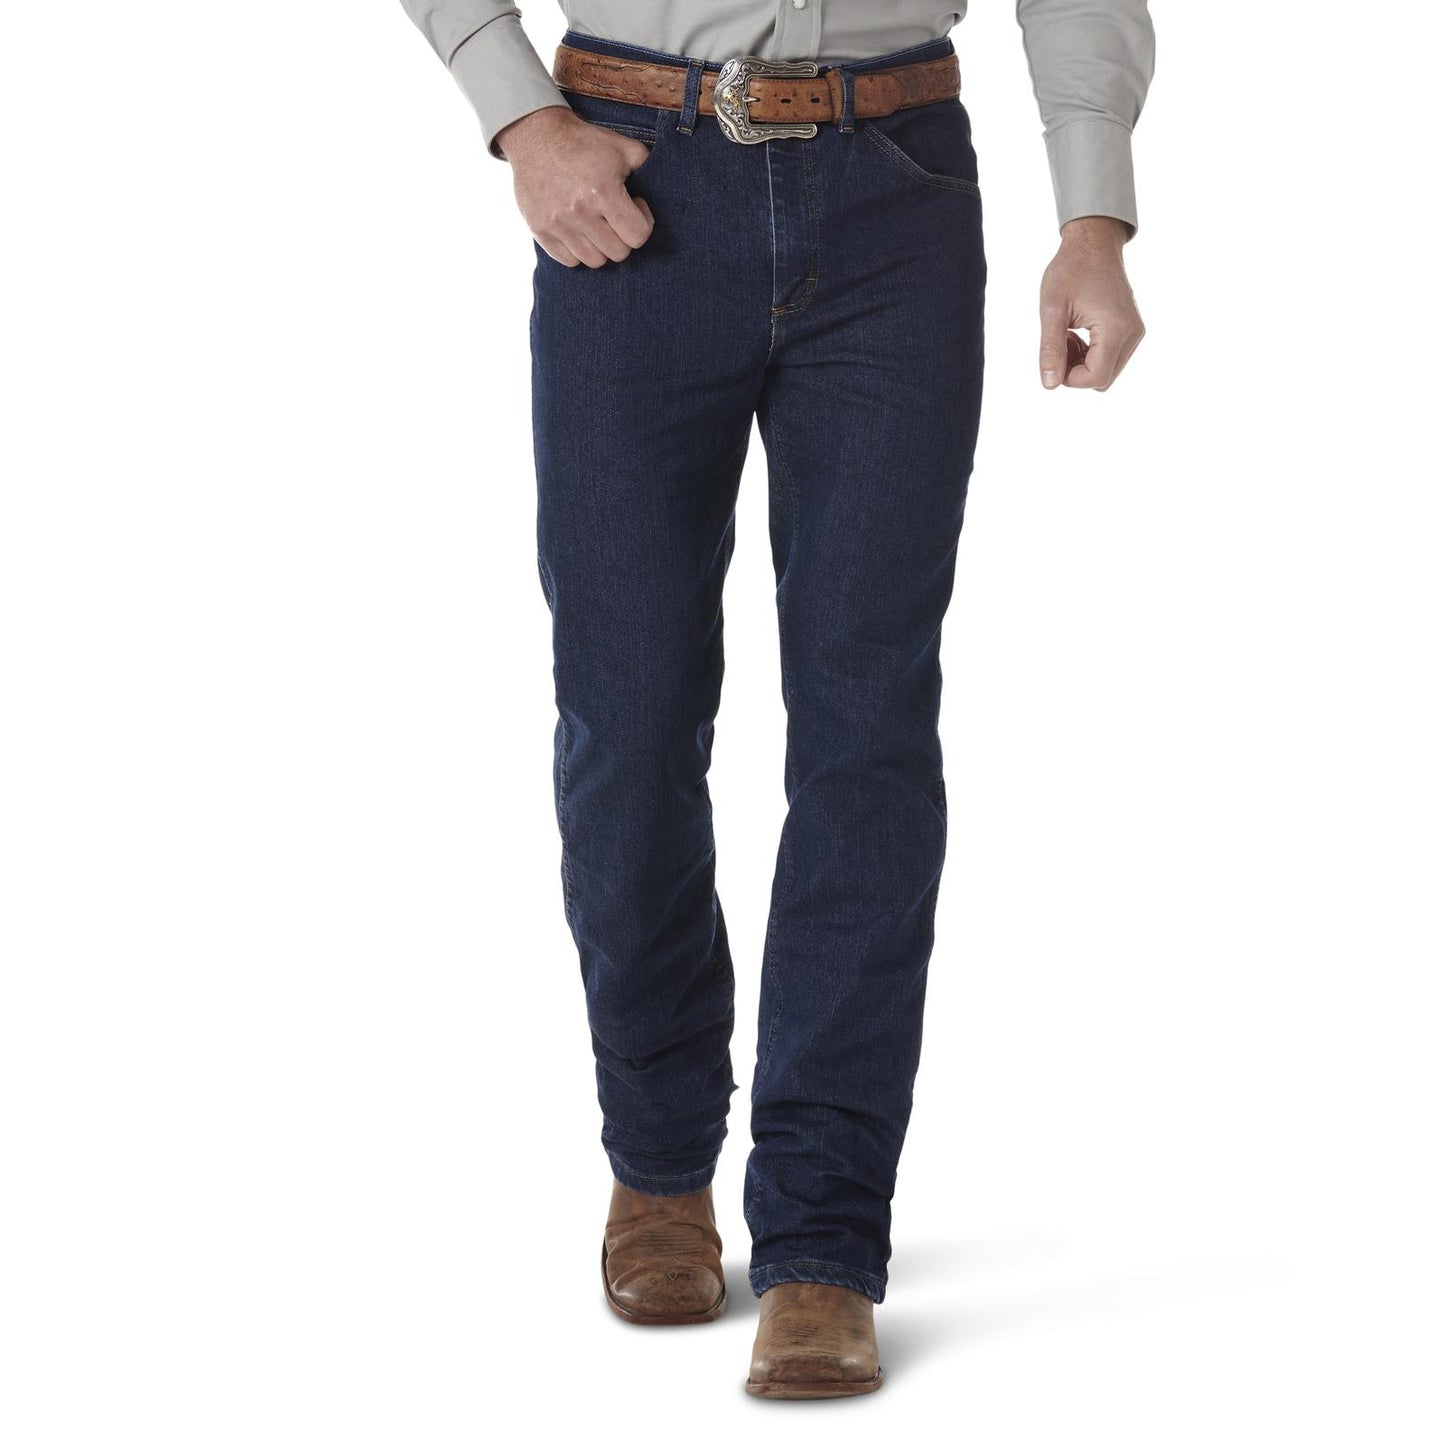 Wrangler® Premium Performance Cowboy Cut® Jeans - Slim Fit - Midnight Rise